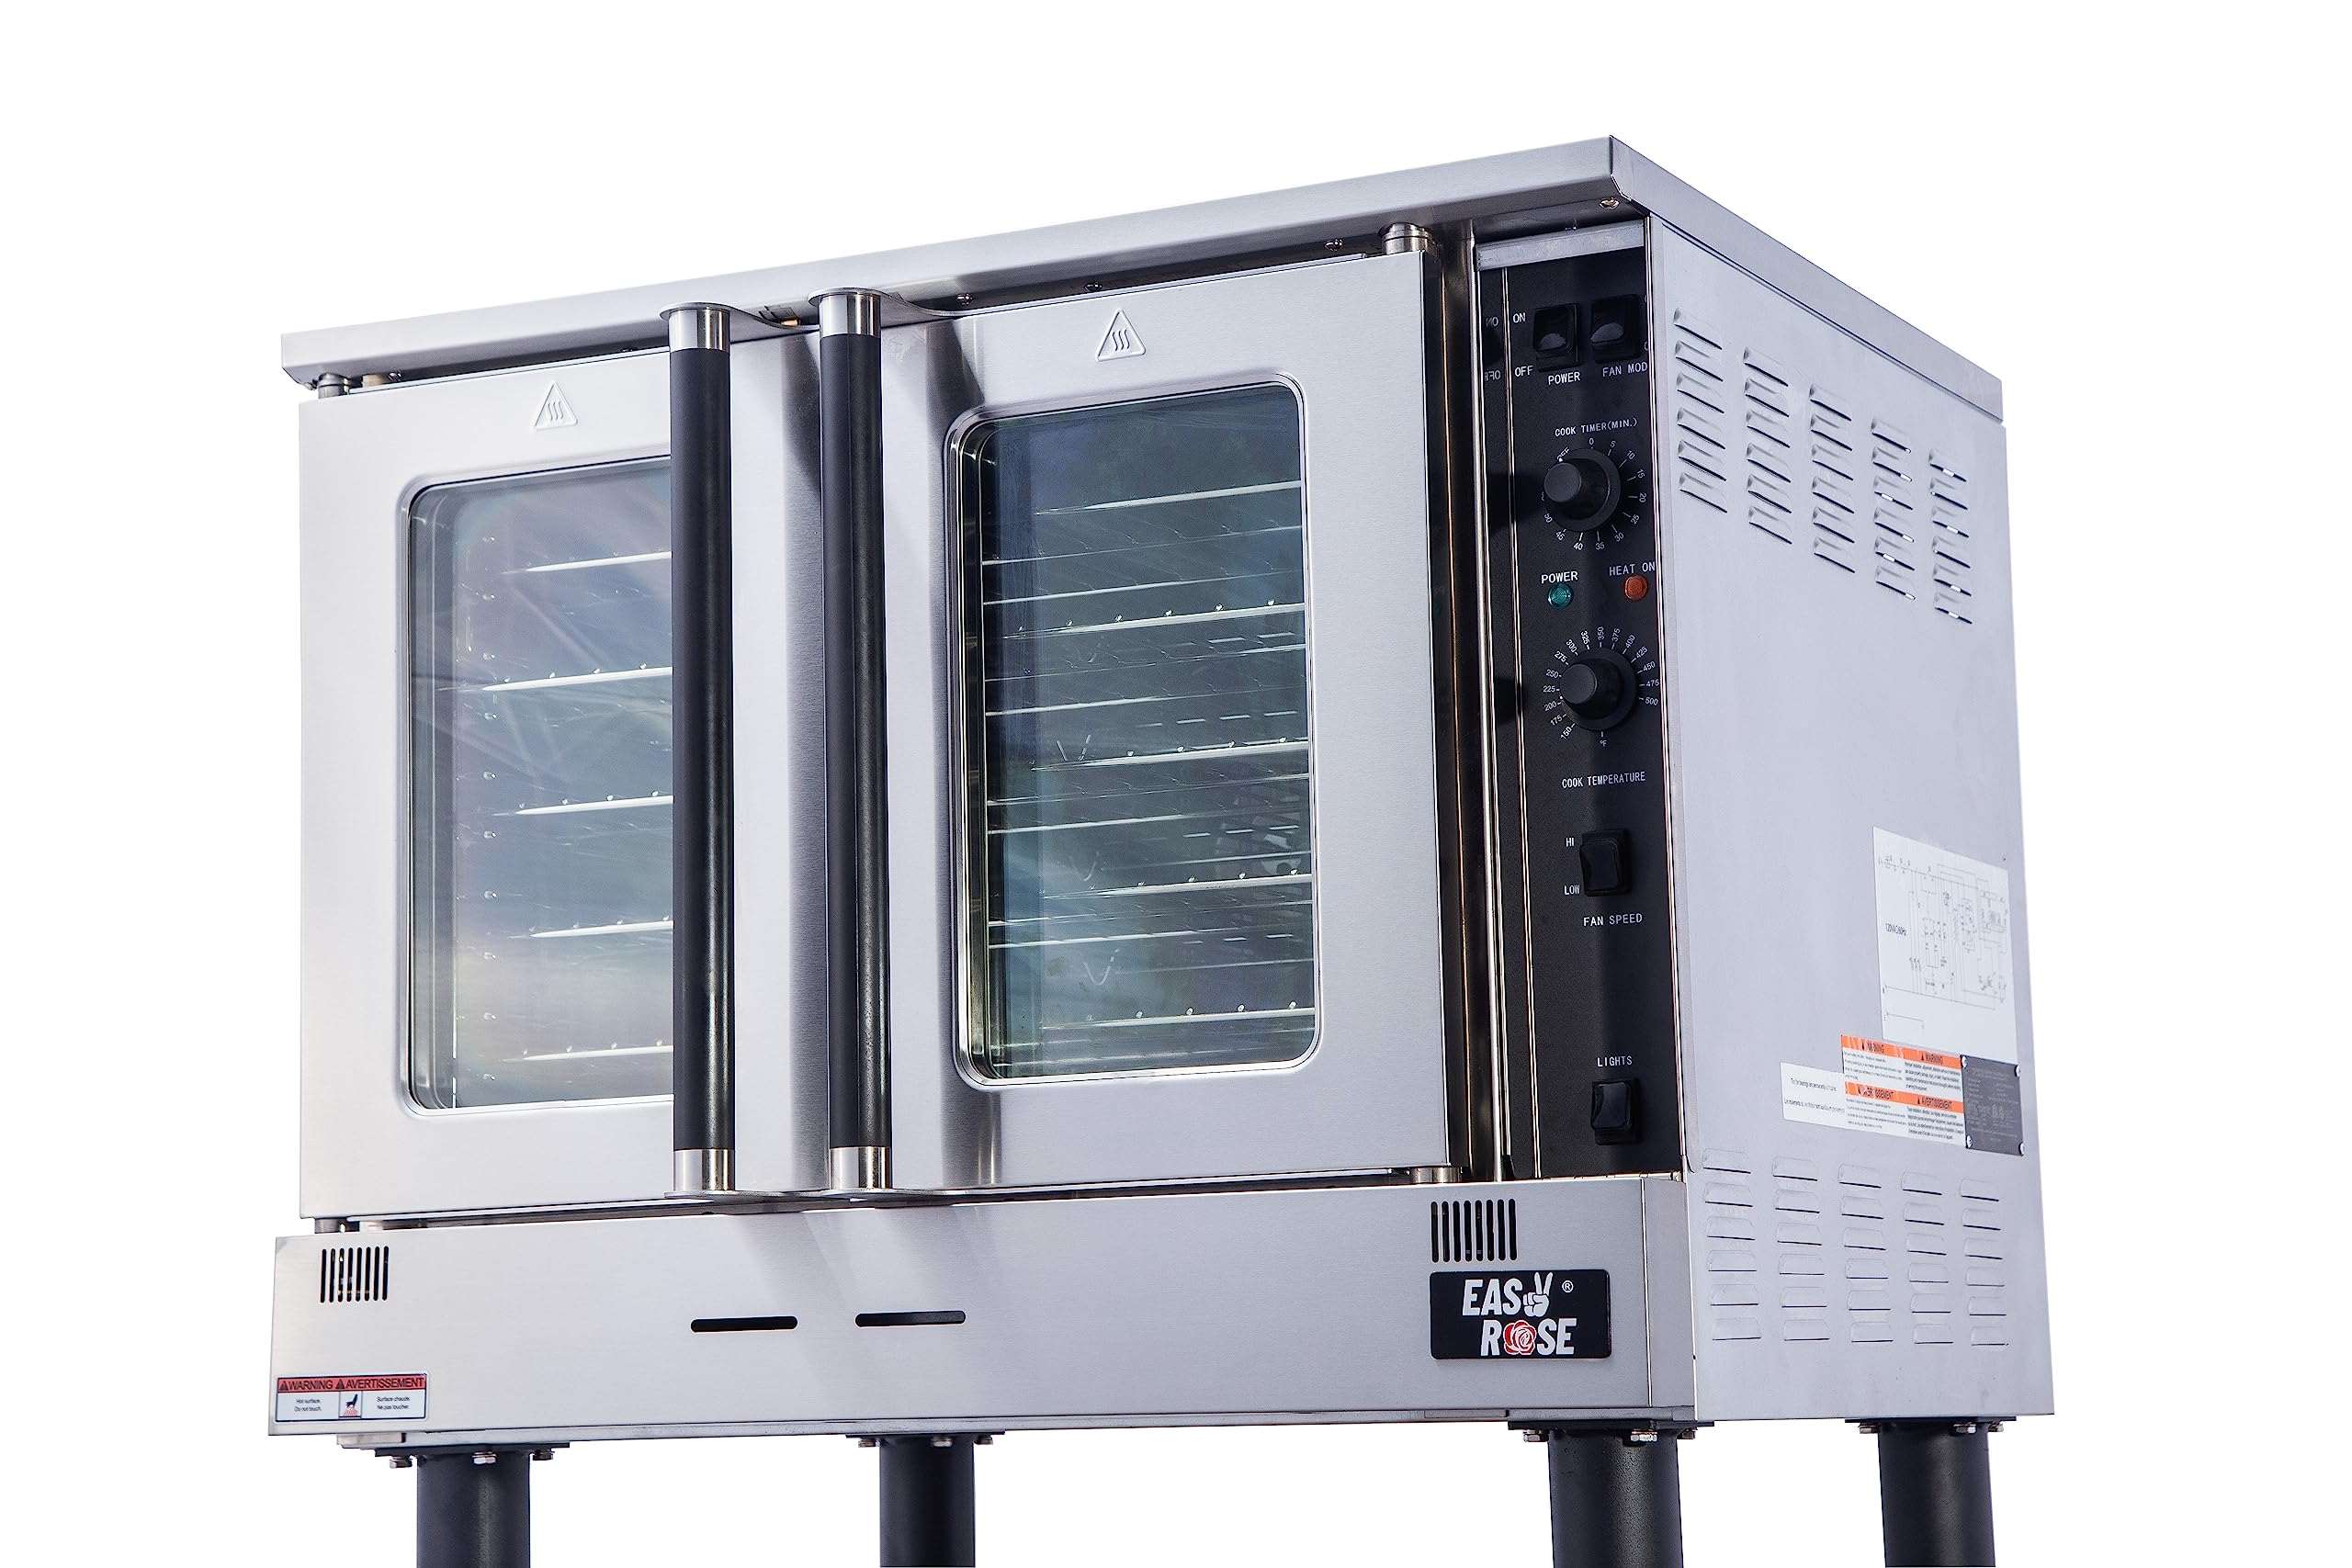 EASYROSE Commercial Convection Oven Single Deck Natural Gas Commercial Ovens for Bakery Kitchen Restaurant, 60,000 BTU